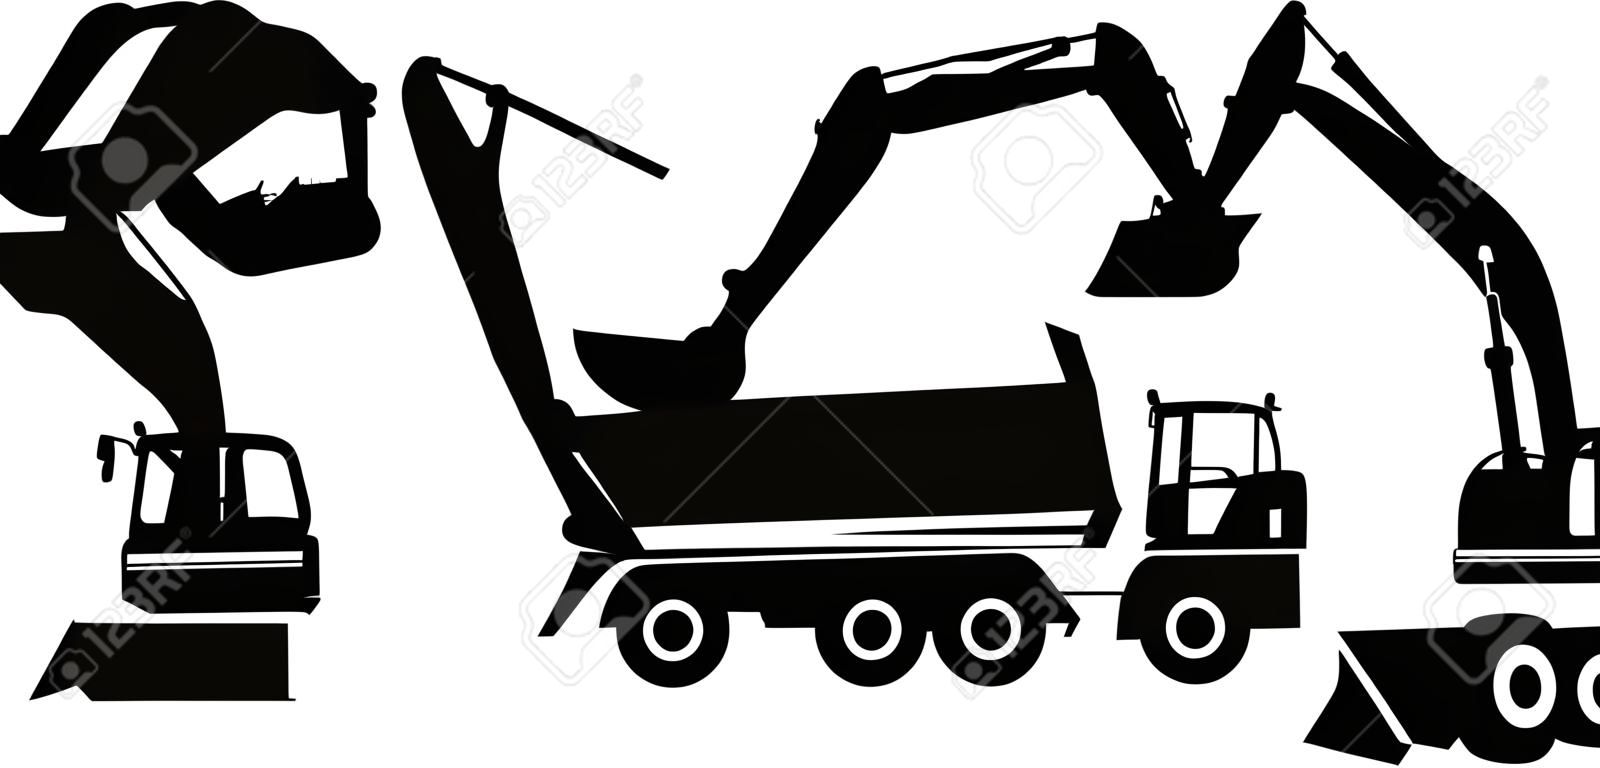 Silhouette excavator and dump truck, illustration 